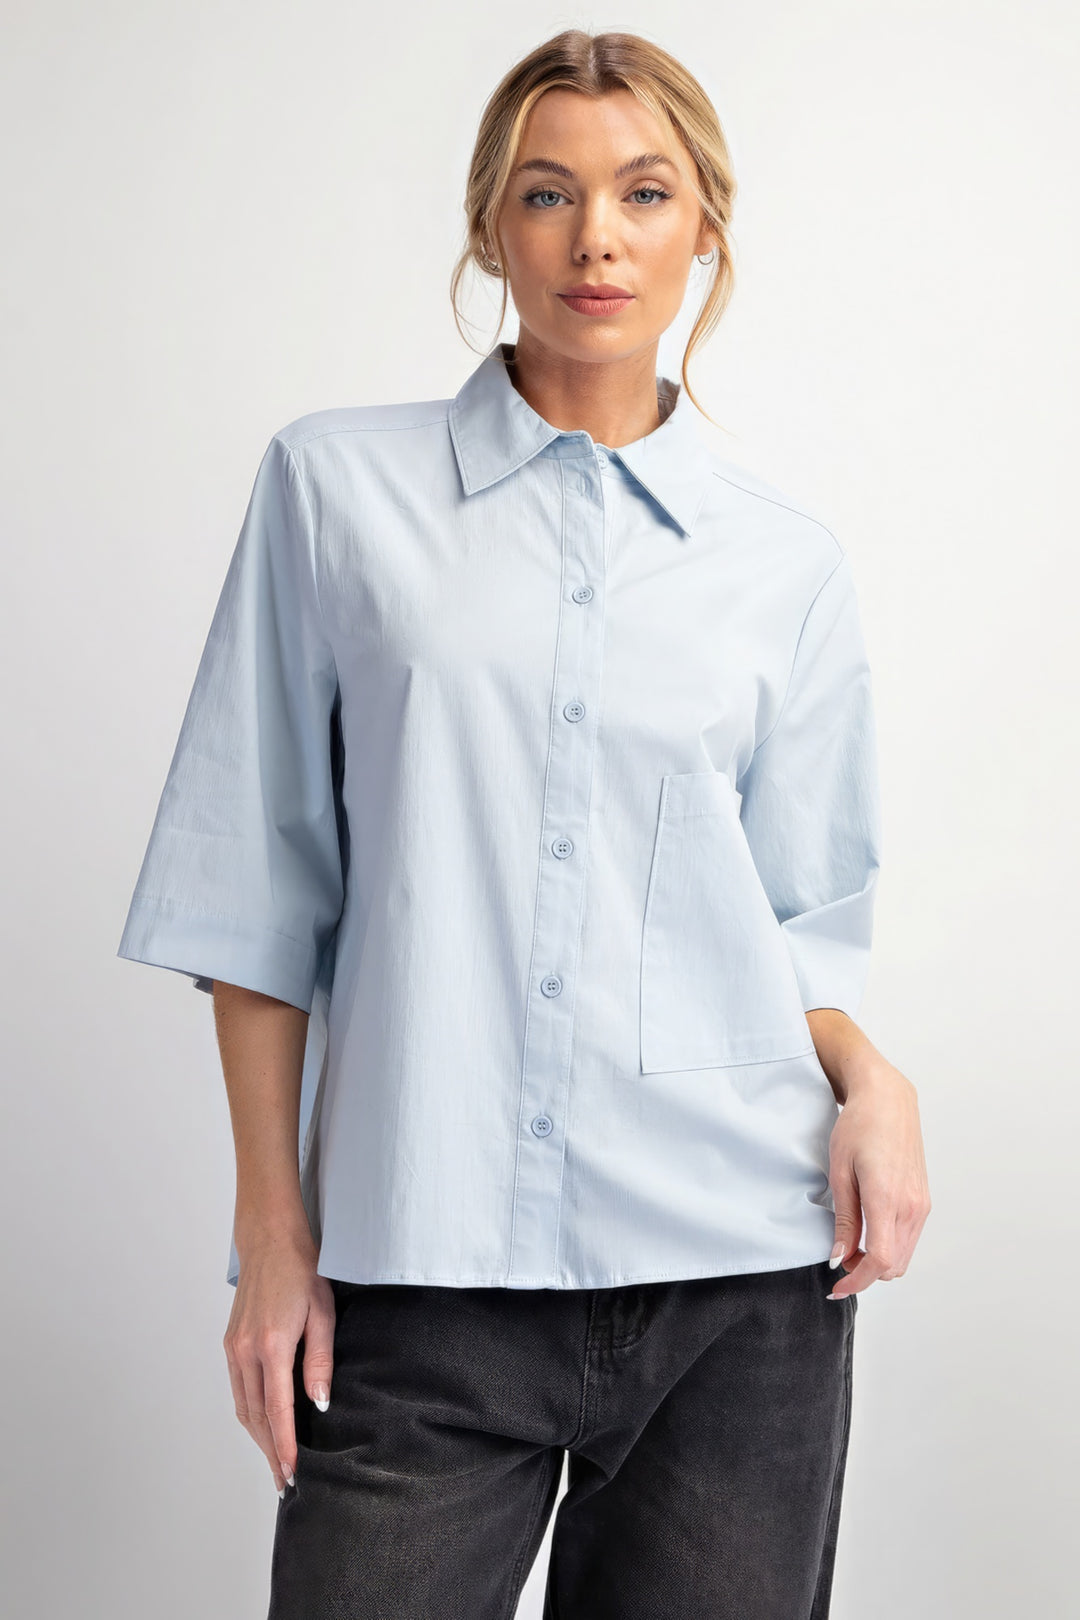 Half Sleeves Stretch Poplin Button Down Shirt in Sky Blue - Sizes S-M-L